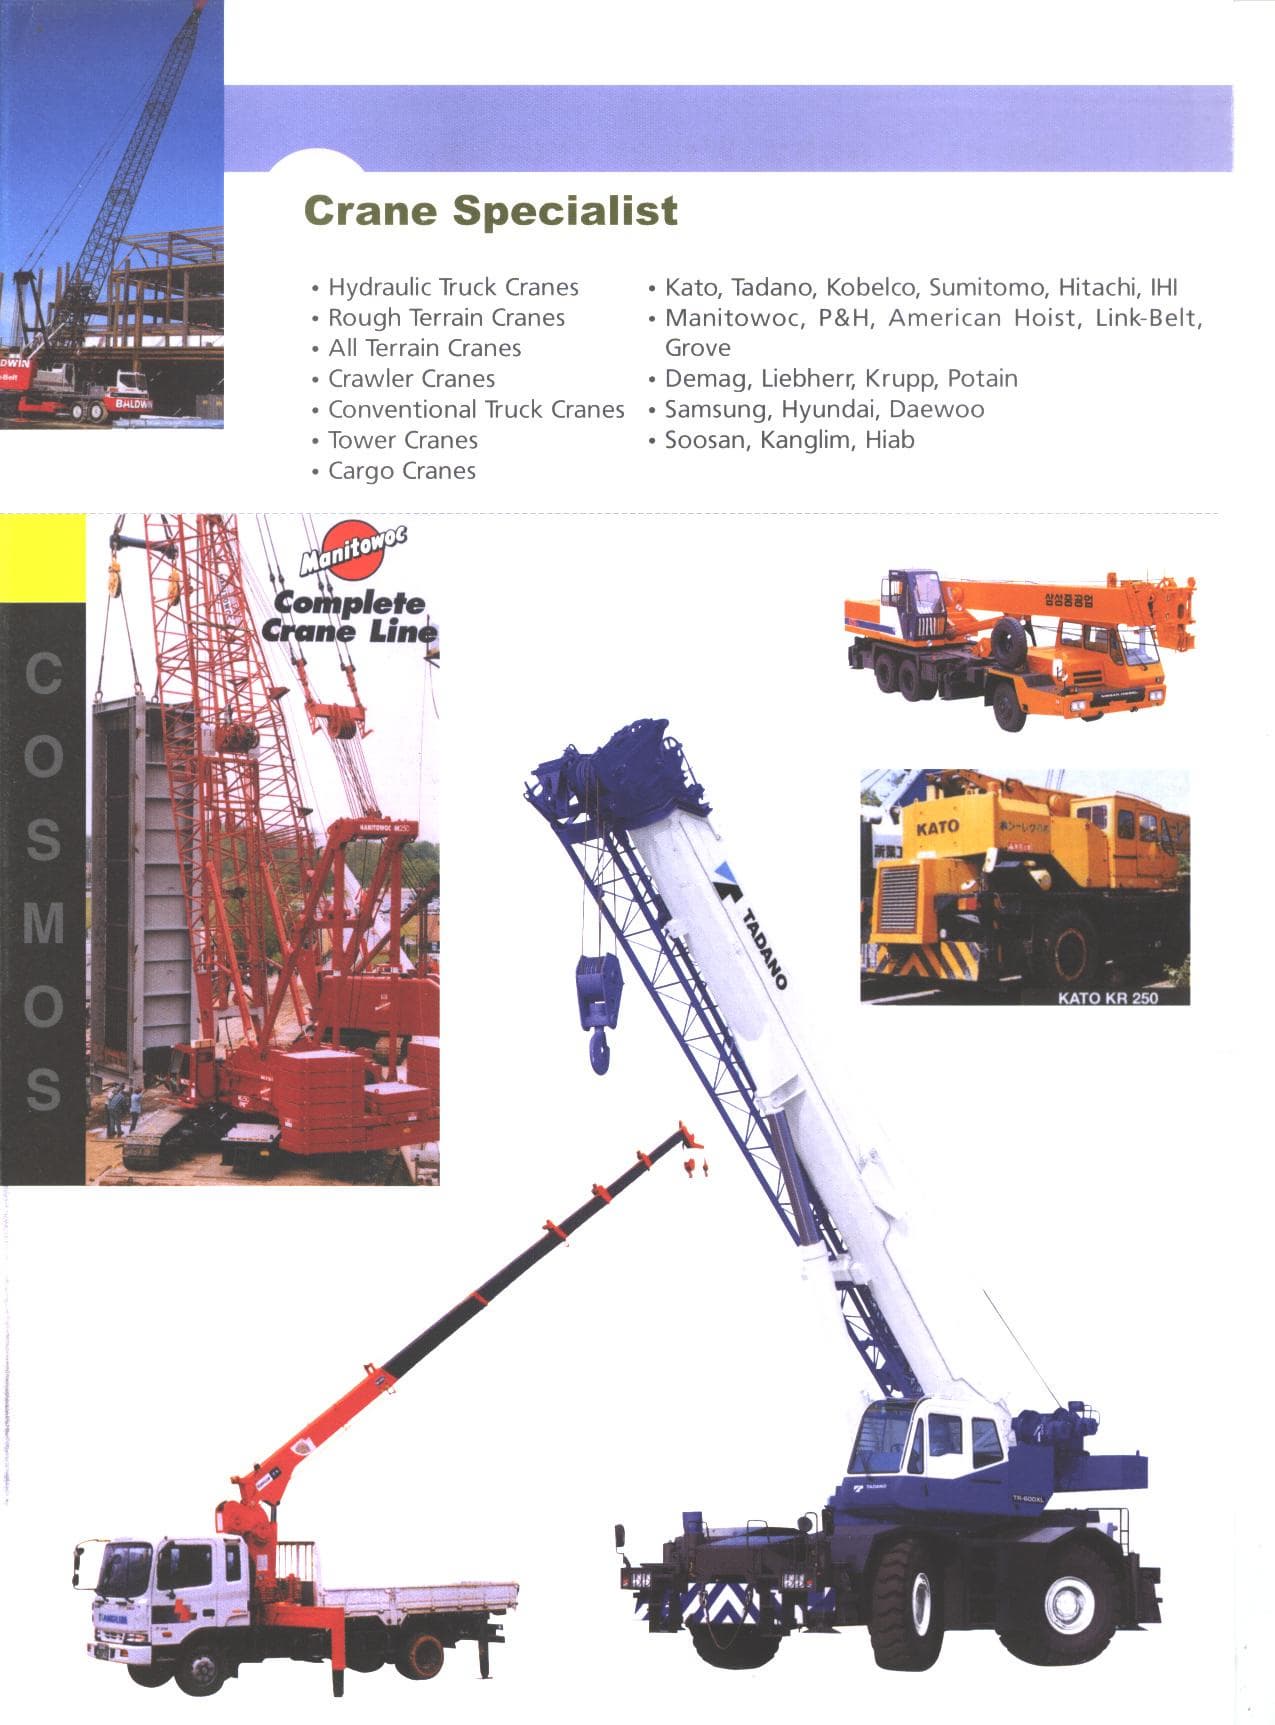 Used Construction Equipment - Cranes, Excavators, Dump Trucks, Wheel Loaders etc.